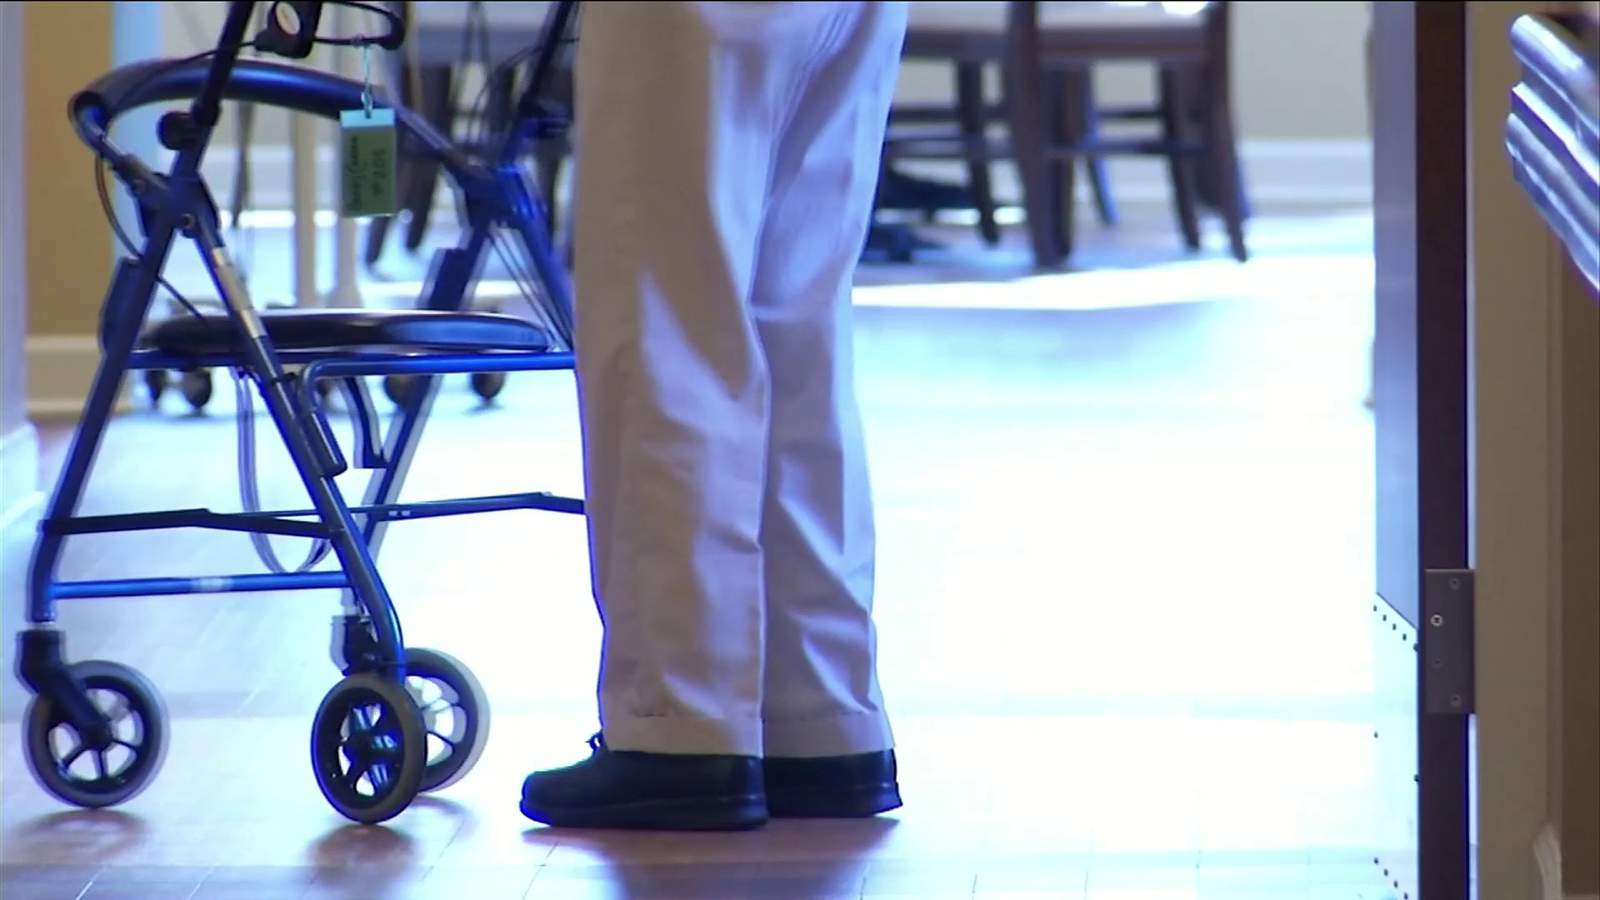 Florida nursing homes facing financial crisis